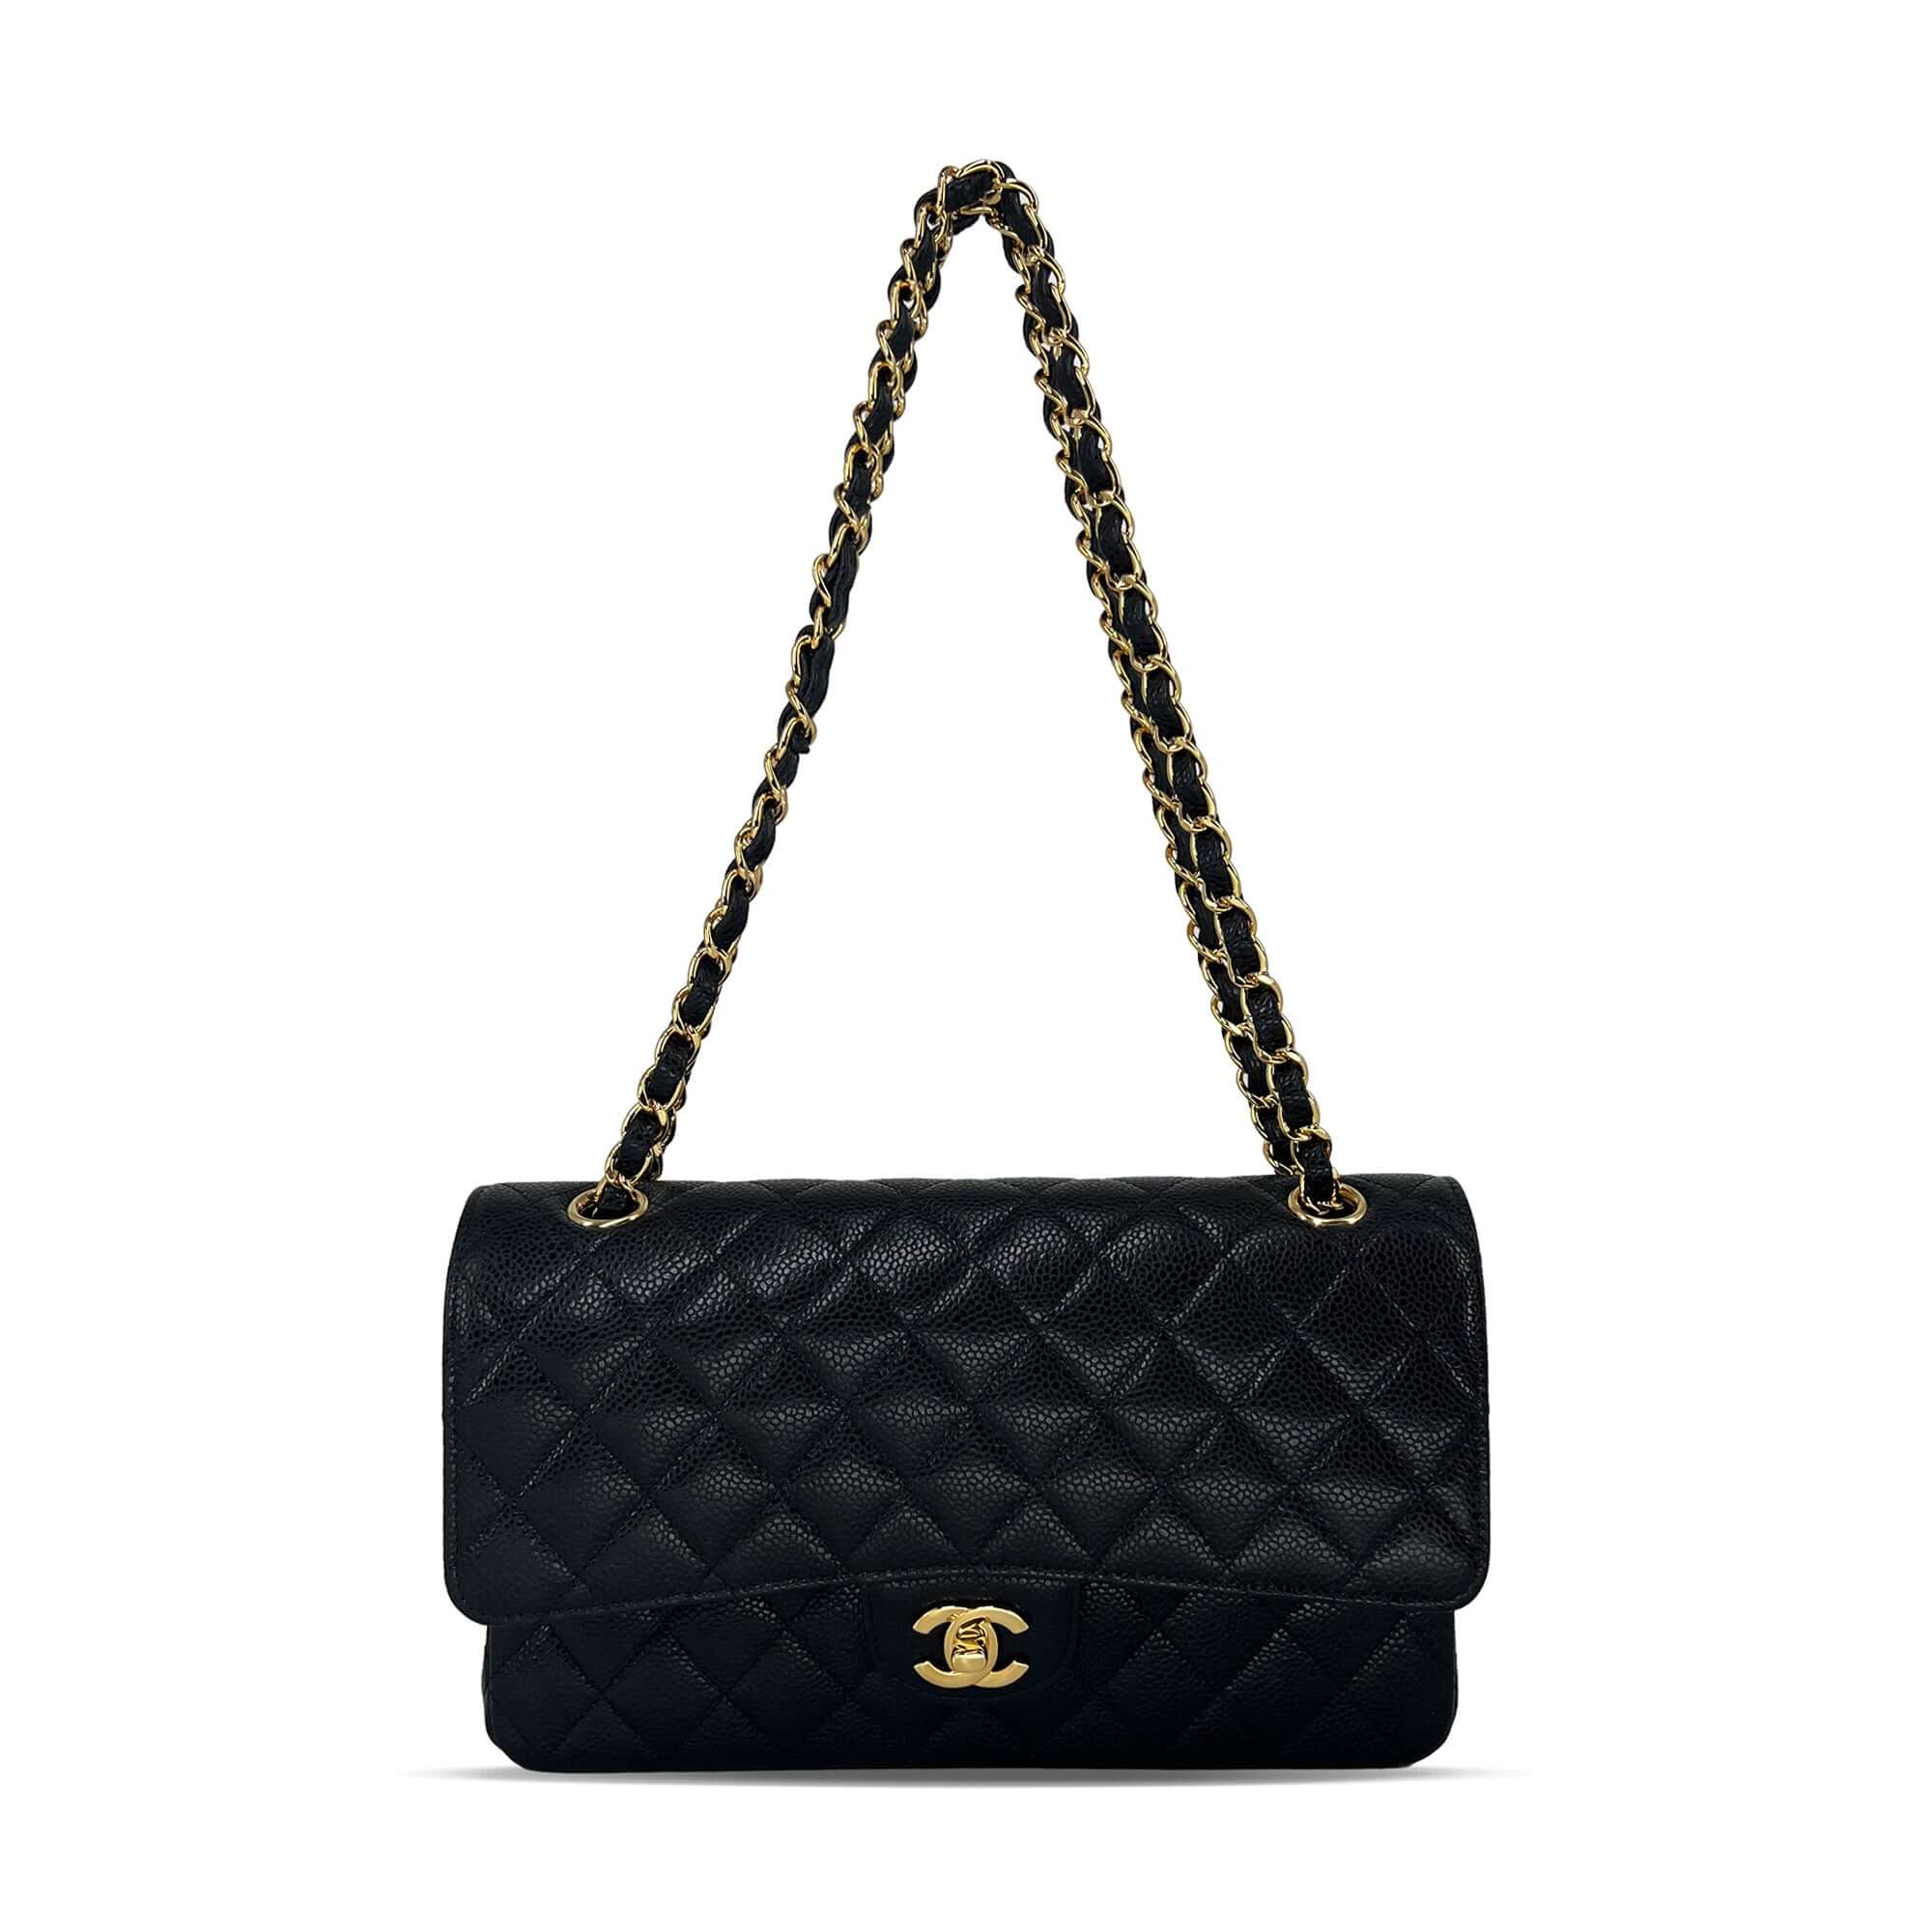 Pre Owned Chanel Handbags, Chanel Handbags for Sale